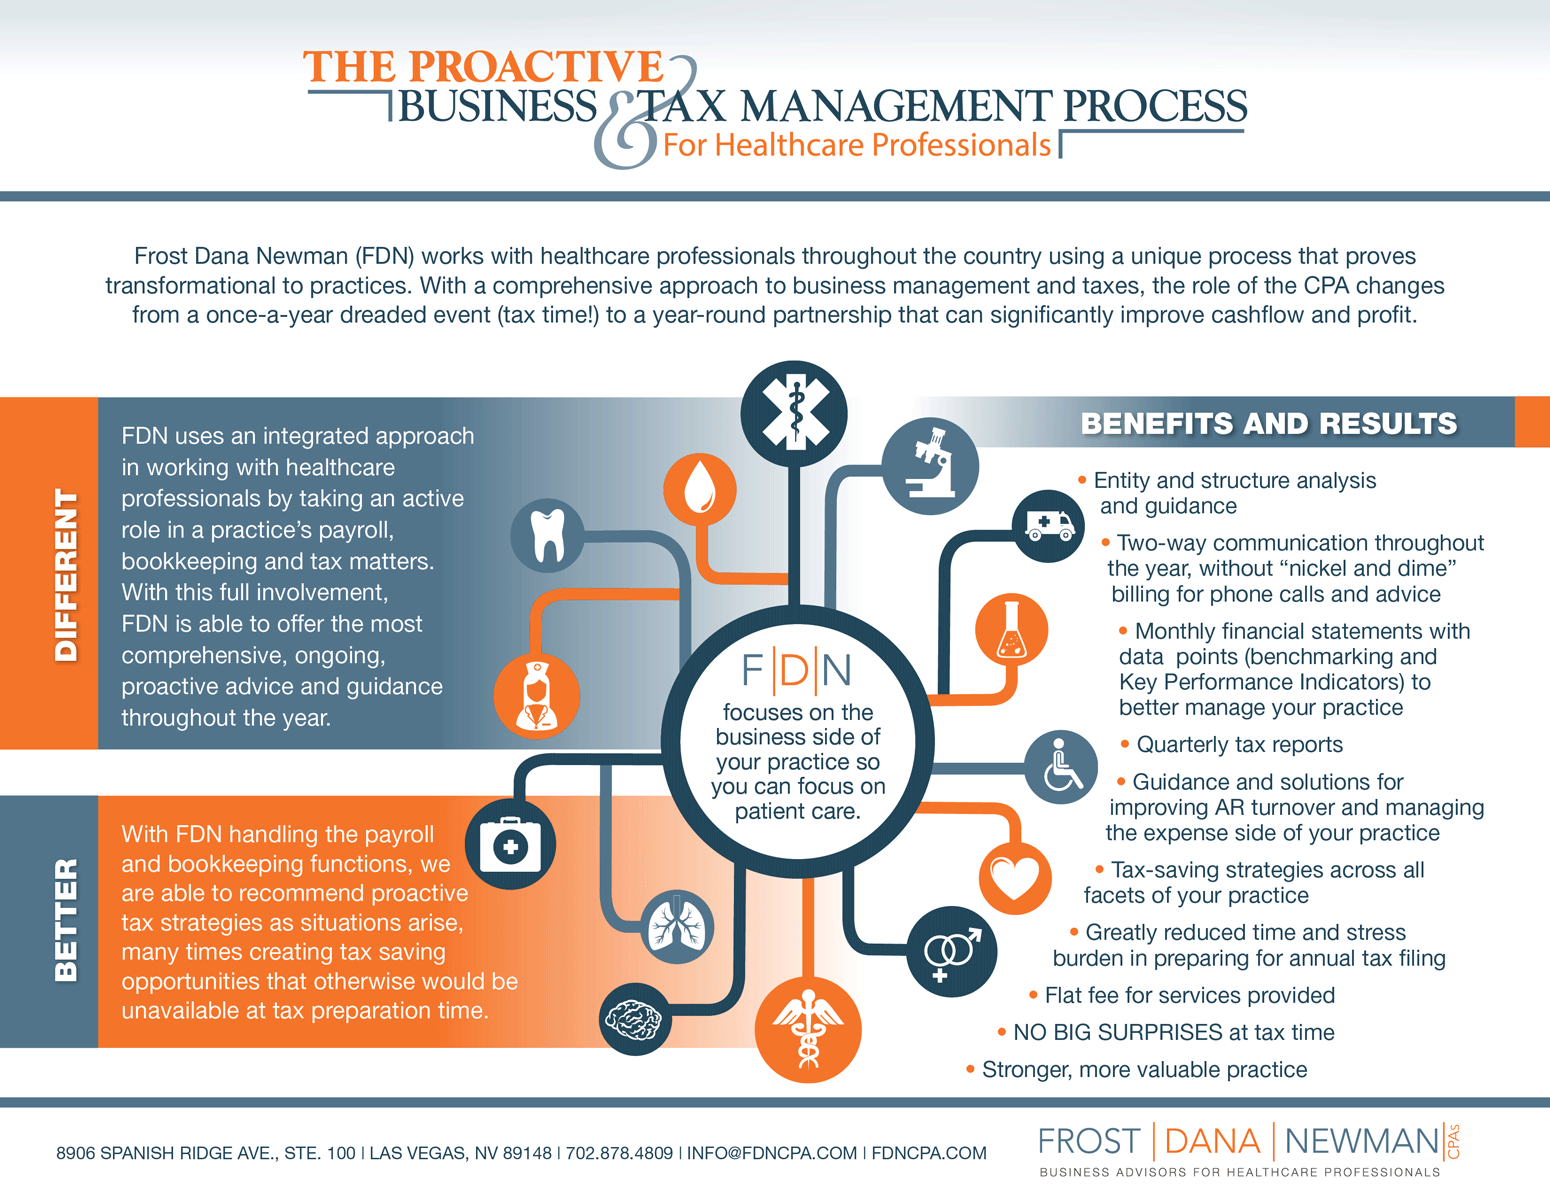 Frost Dana Newman Proactive Business & Tax Planning Management diagram